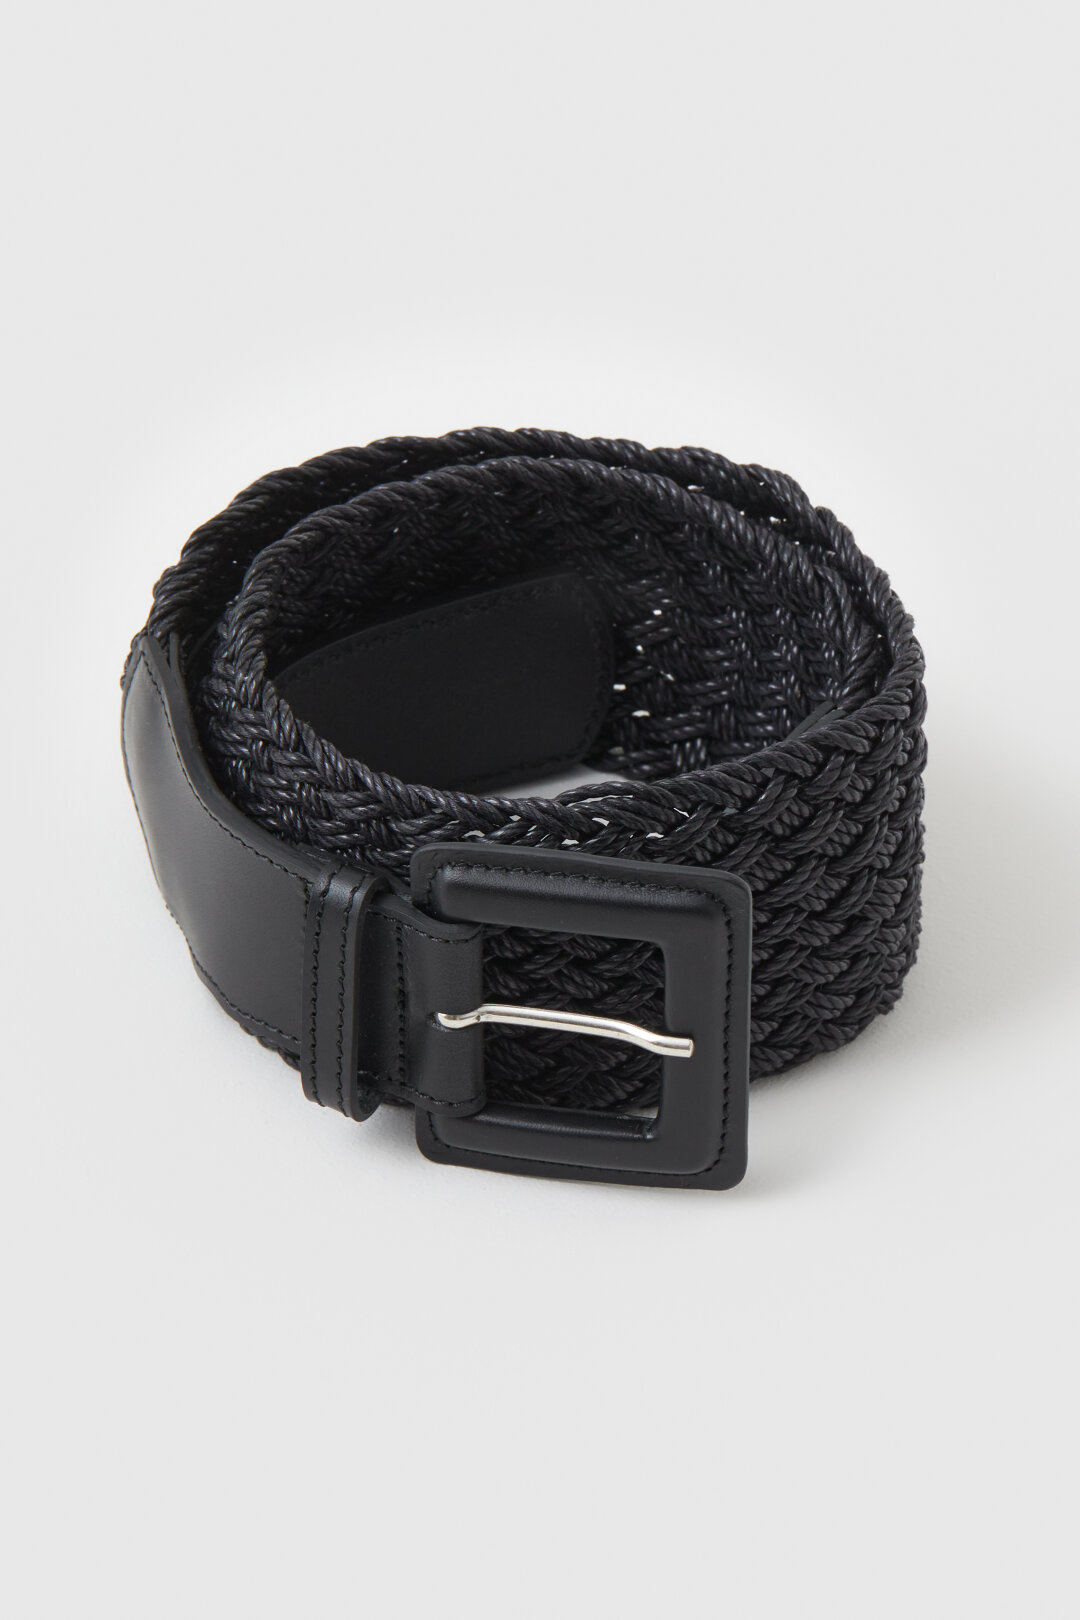 Belt black woven-1